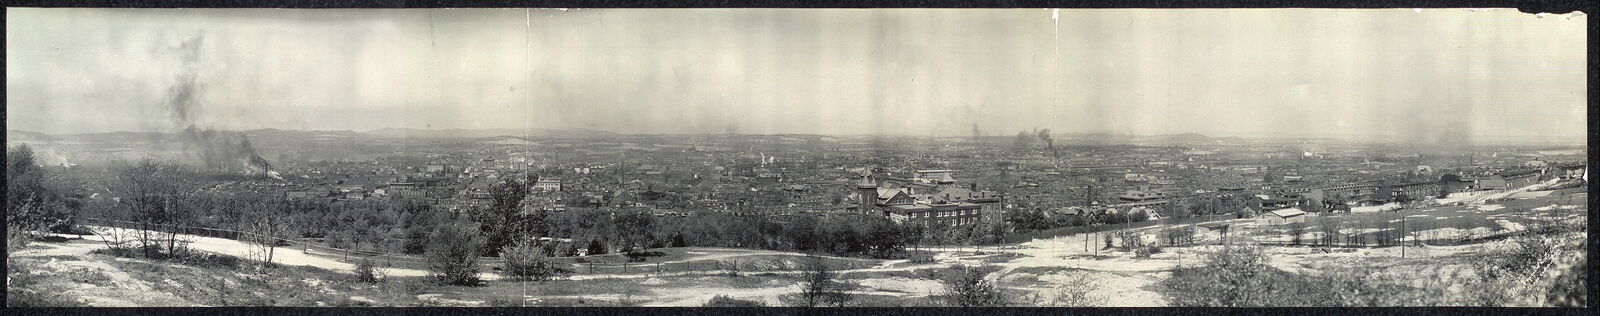 Photo:1909 Panorama of Reading,Pennsylvania